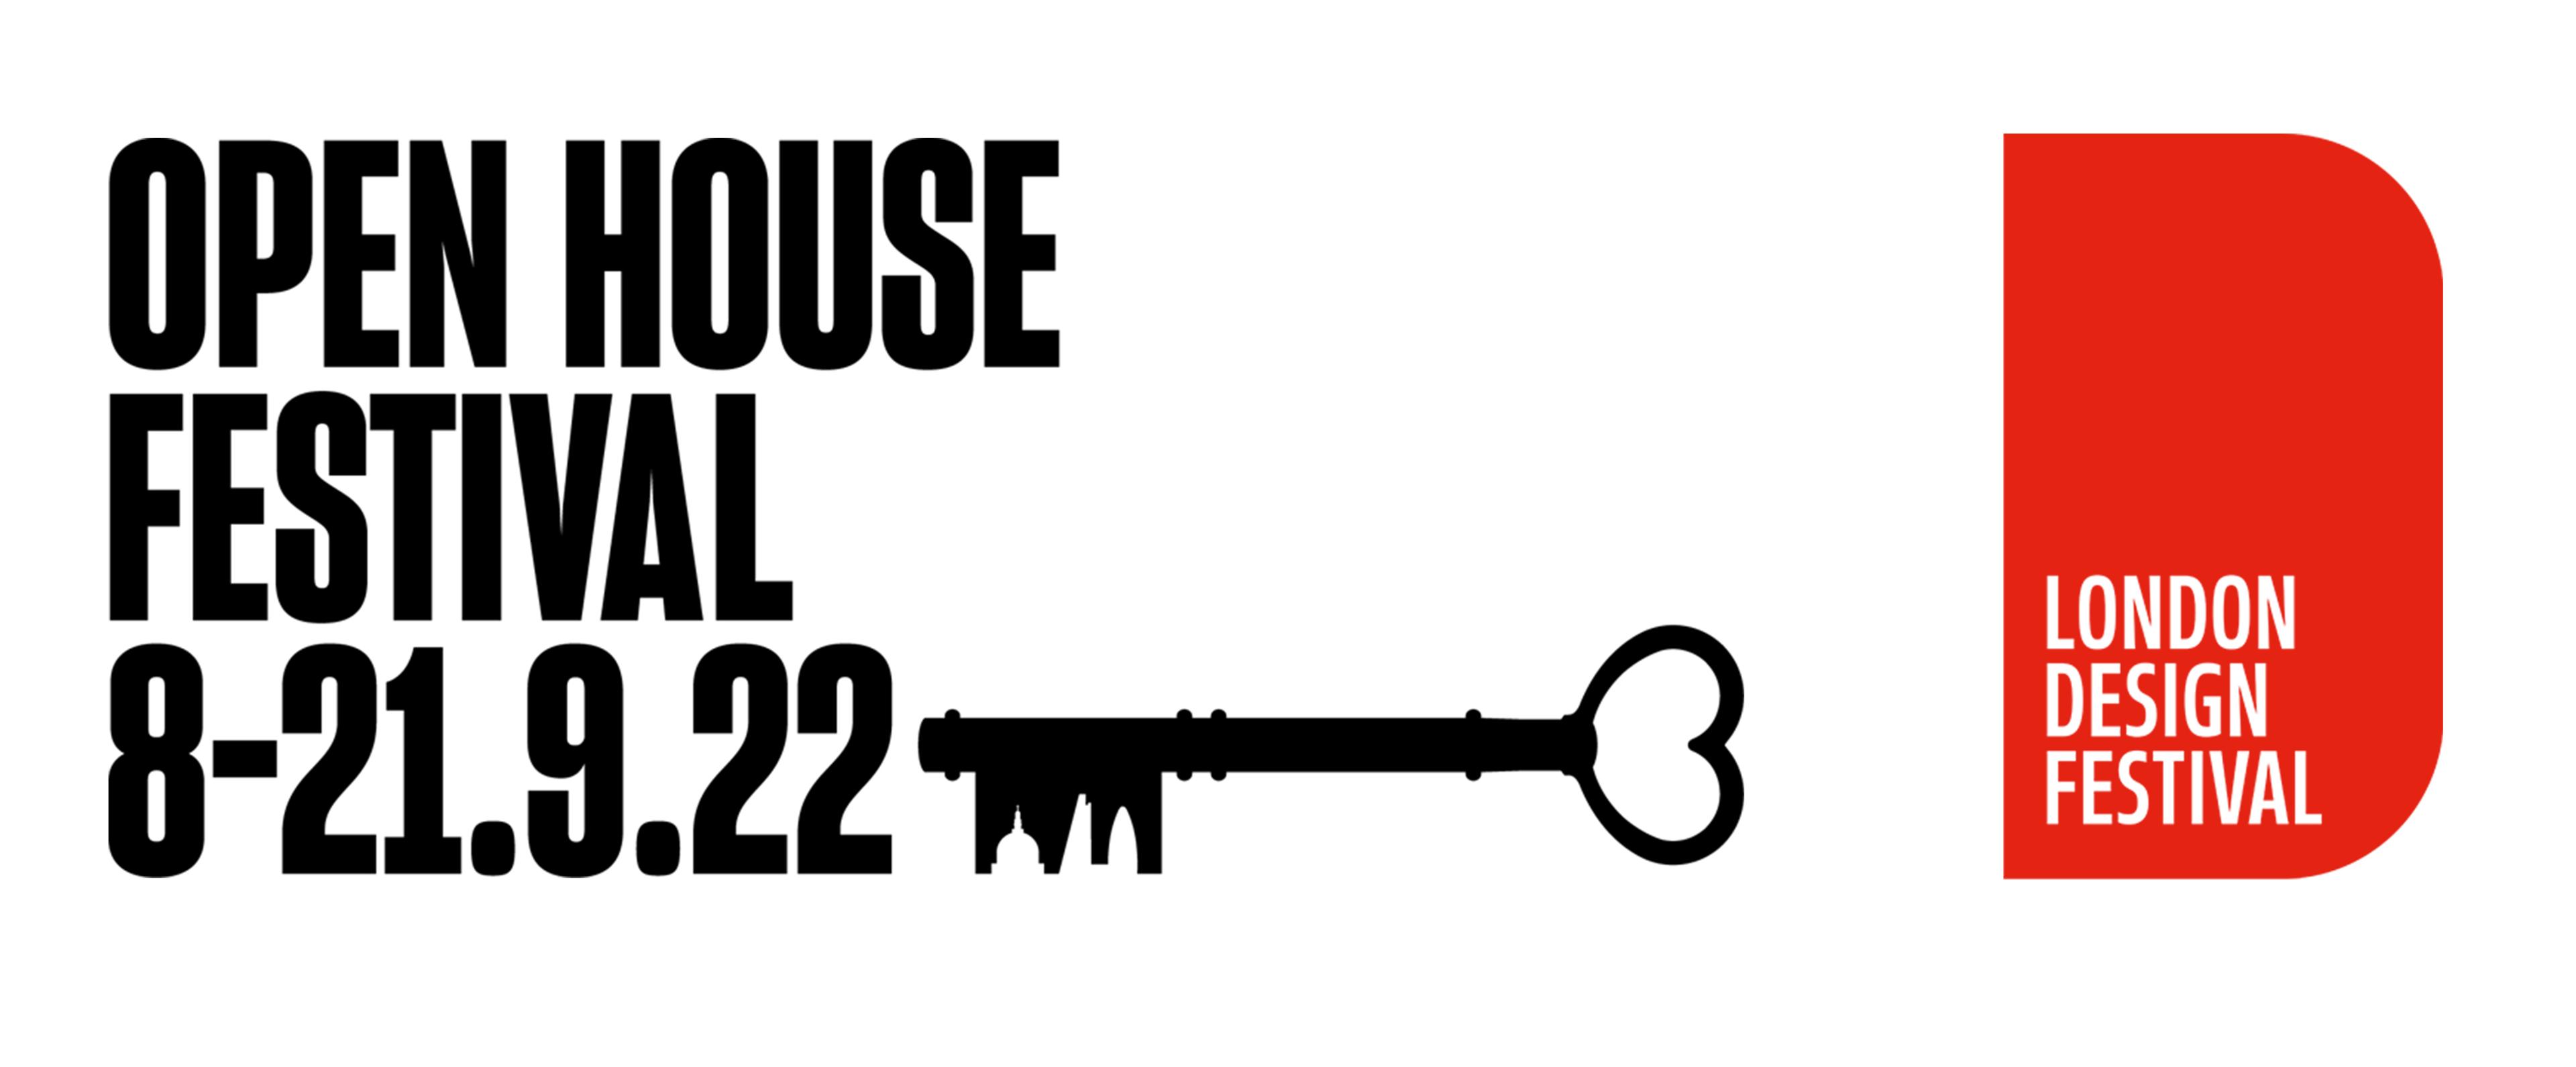 Open House and London Design Festival logos